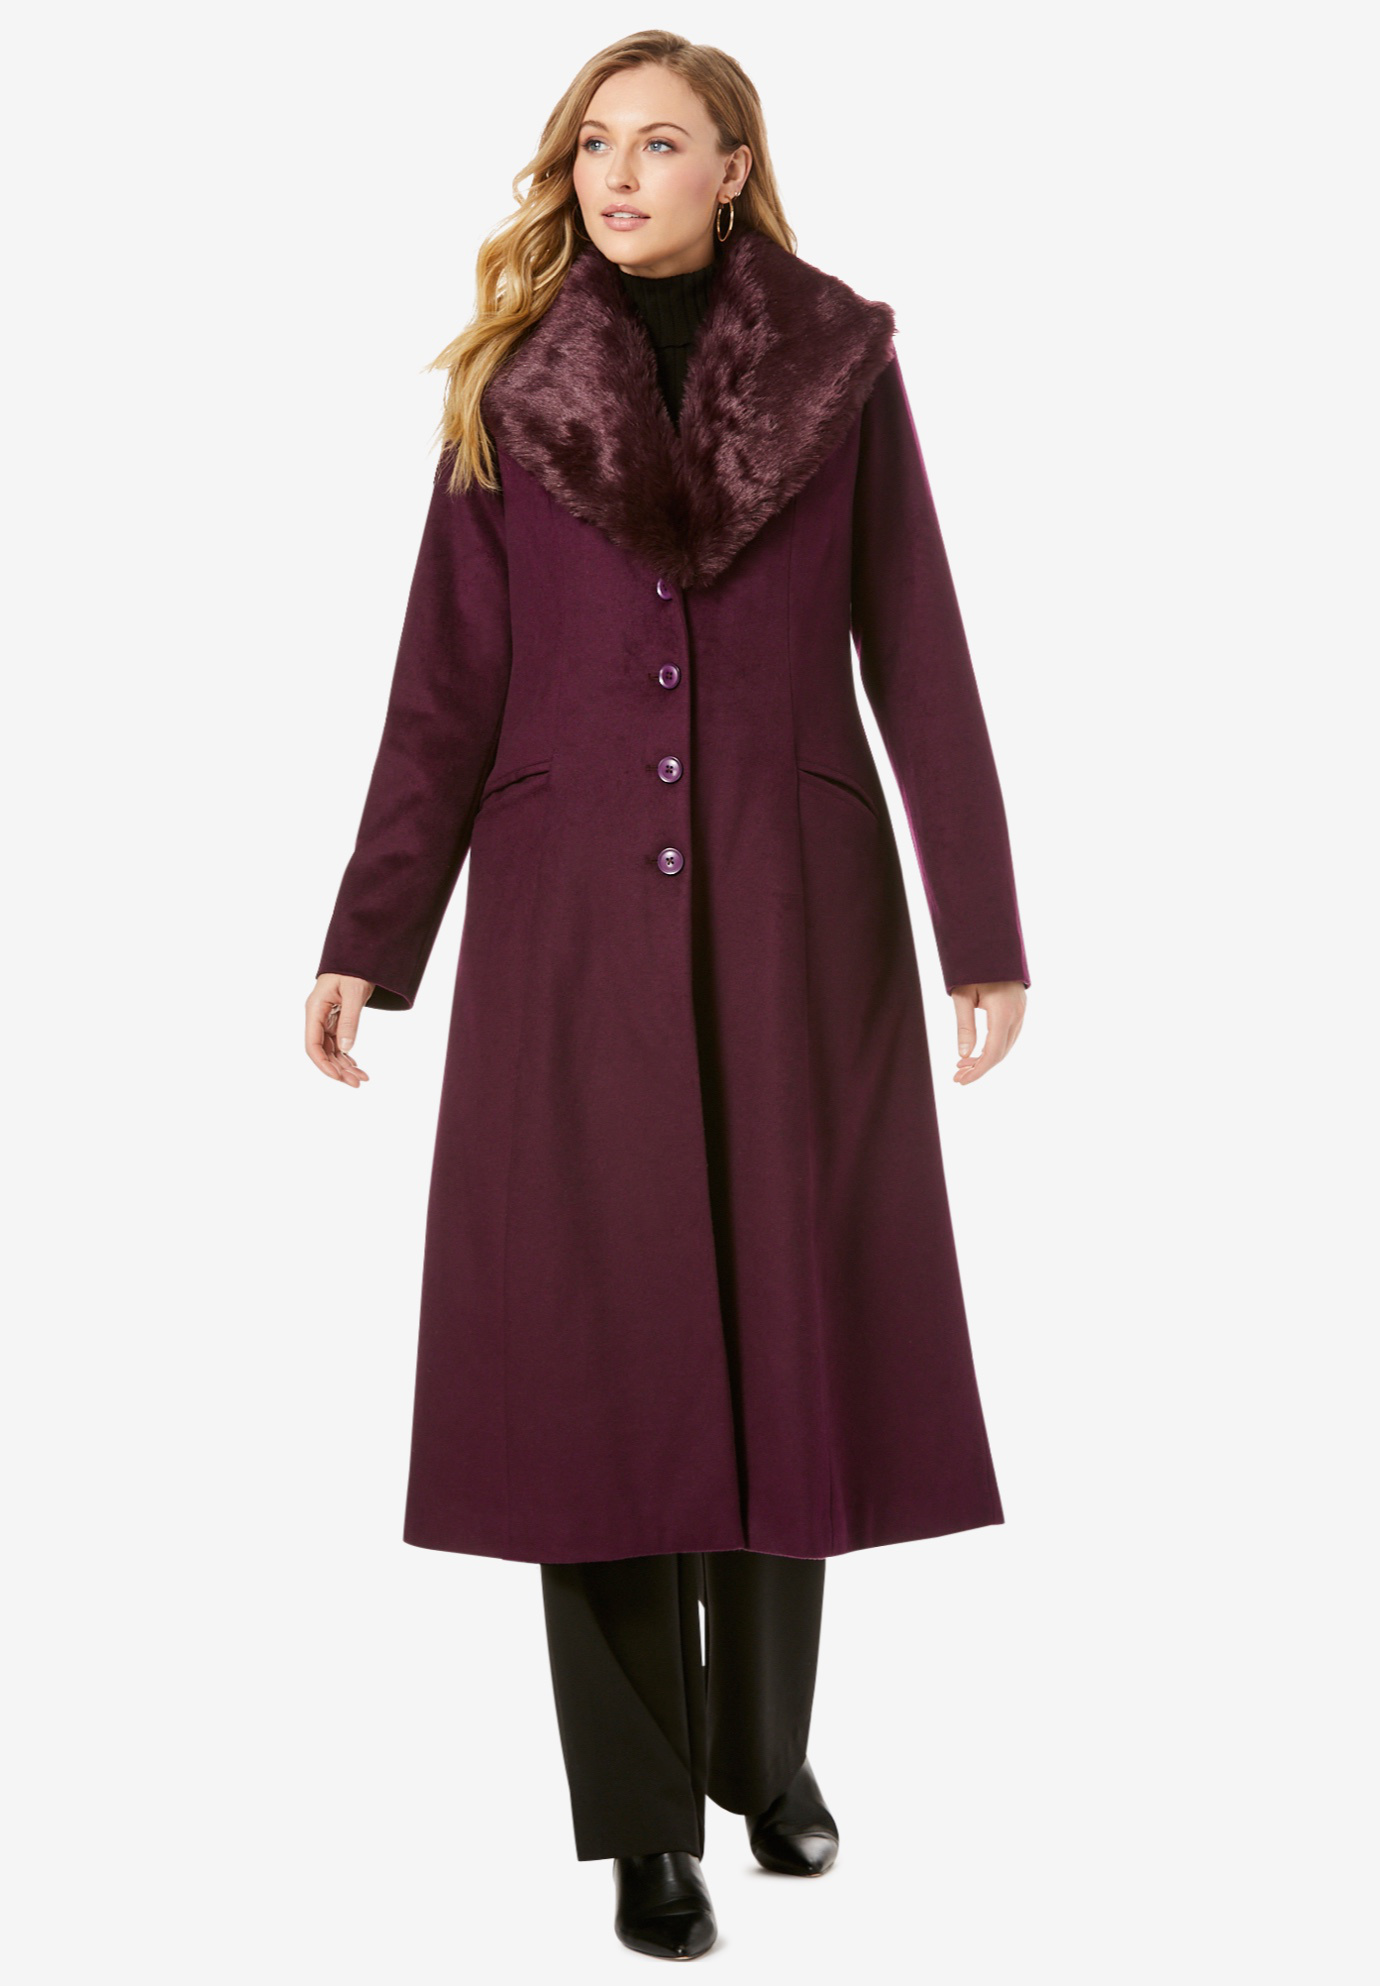 Womens Wool Coat faux fur collar Black straight Jacket Size 8 10 12 14 16 